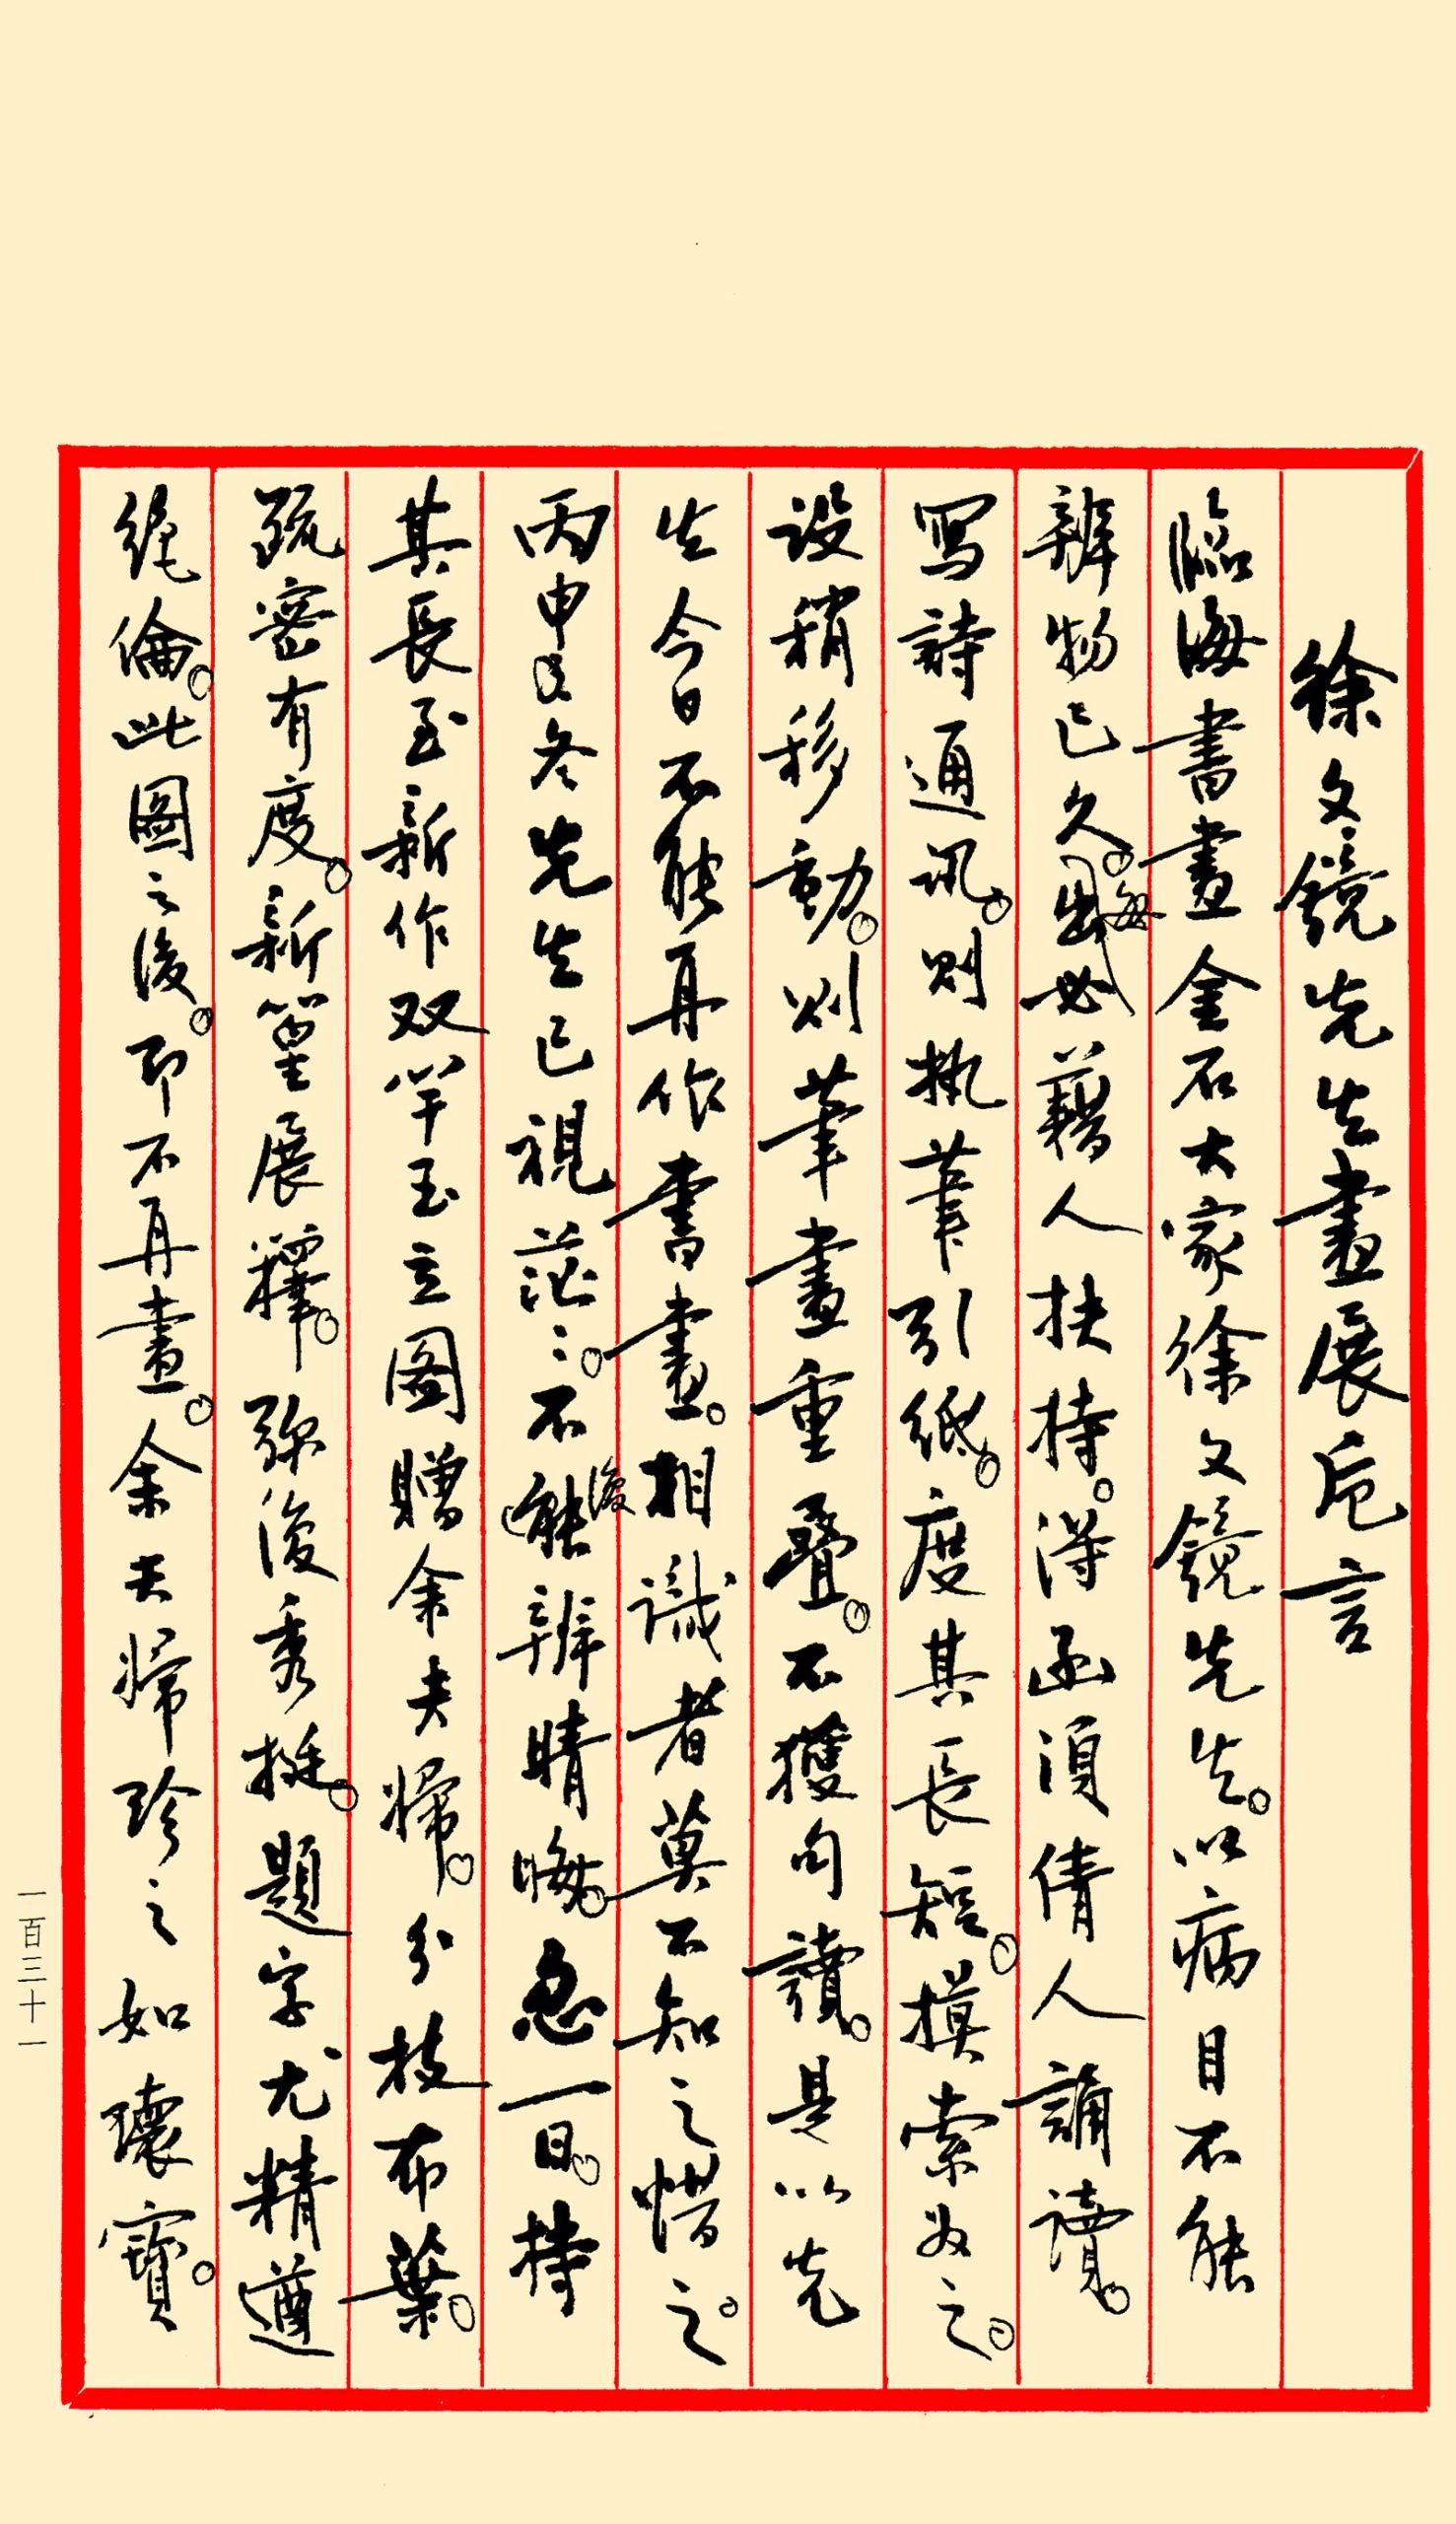 Manuscrit de Cai laoshi, page 1